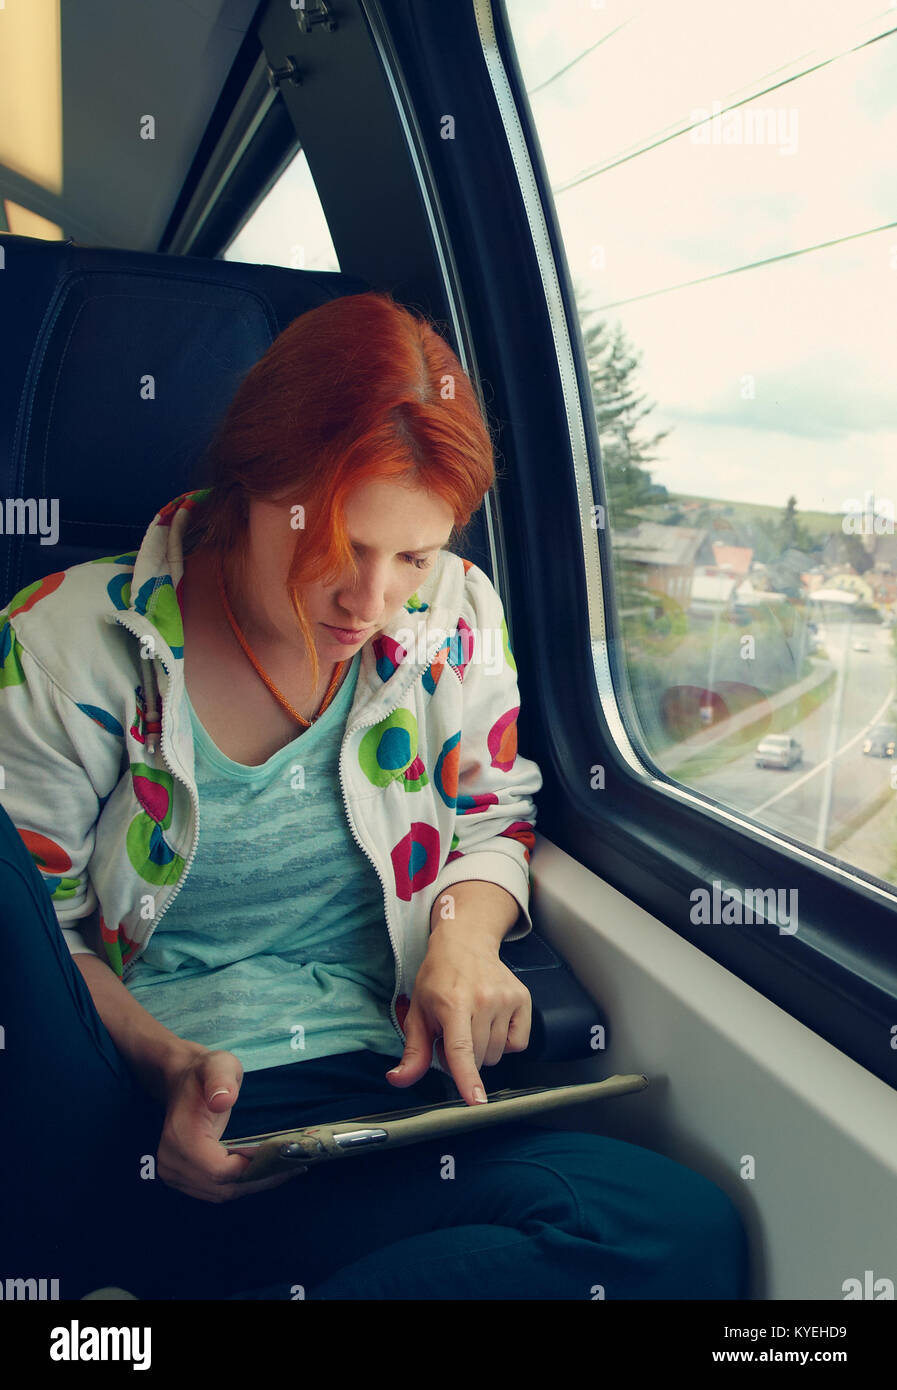 woman riding on a train Stock Photo